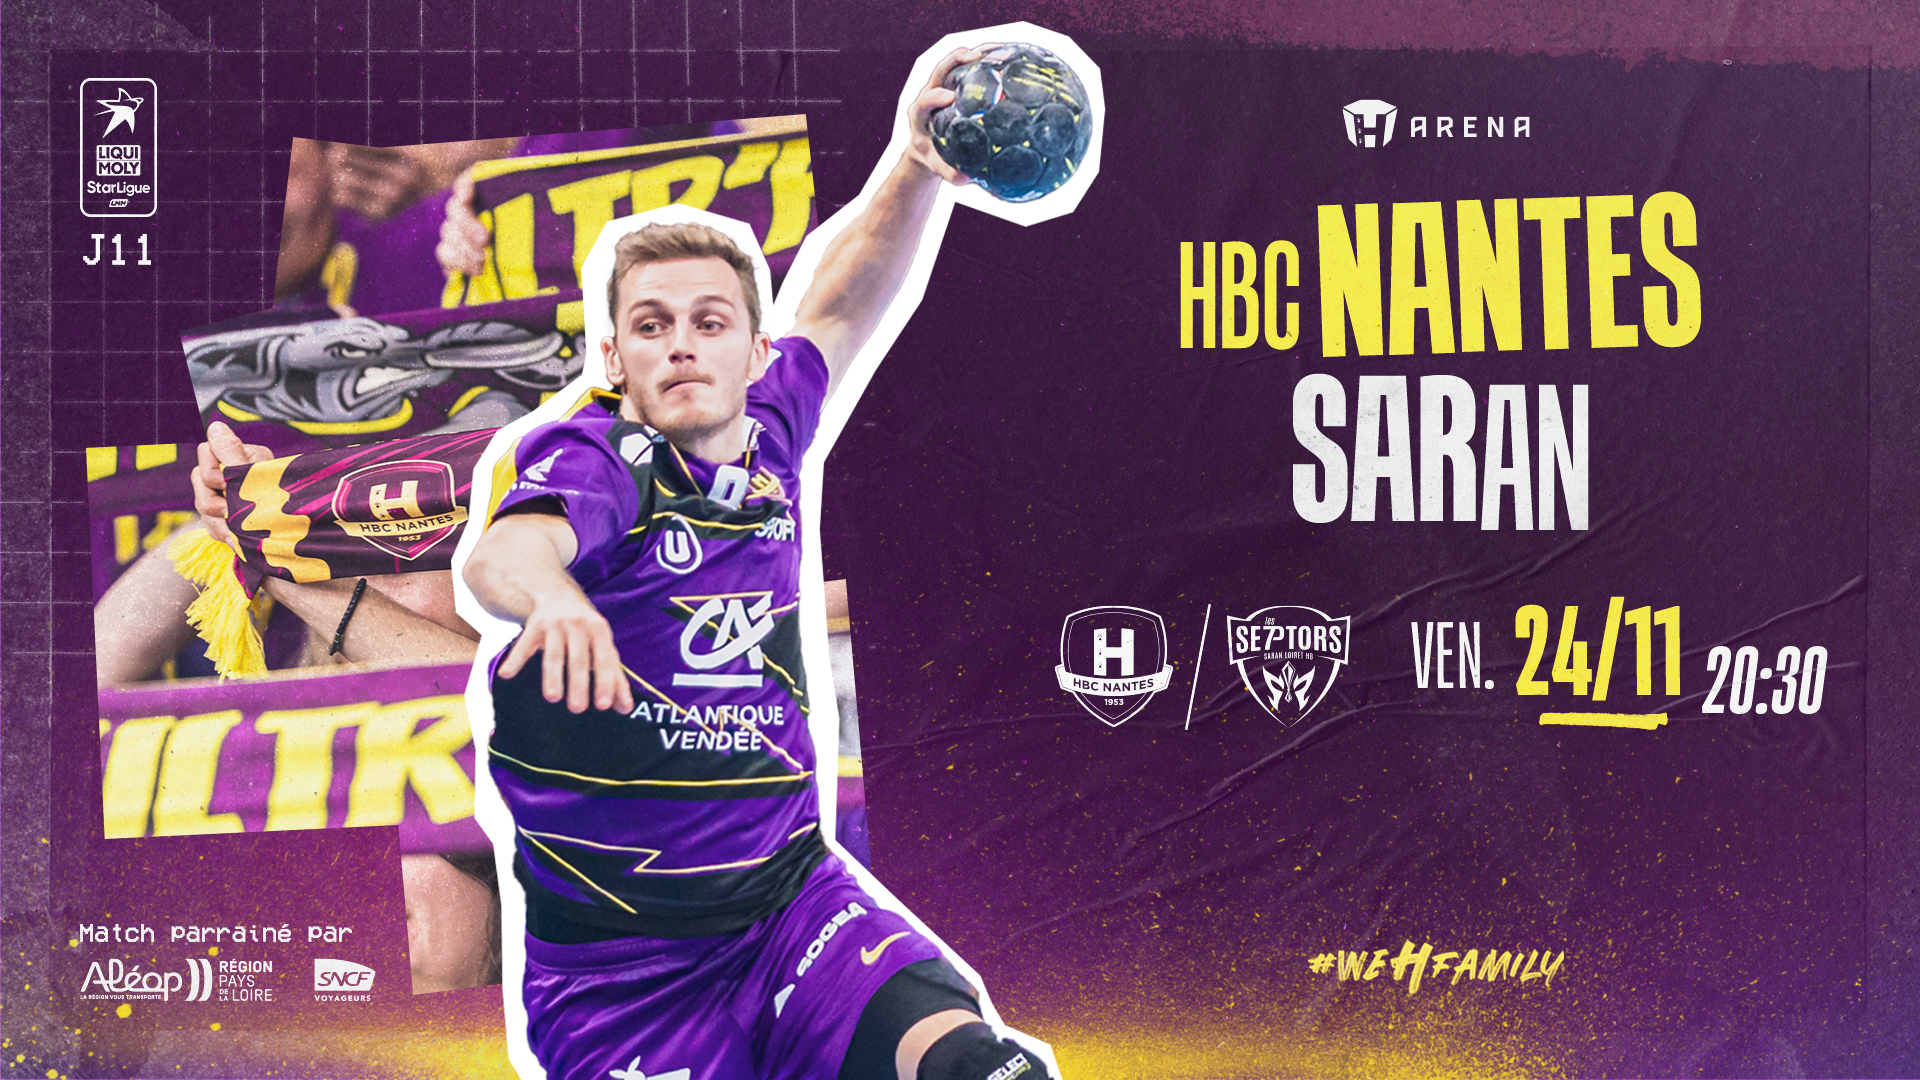 HBC Nantes - Saran : Infos pratiques